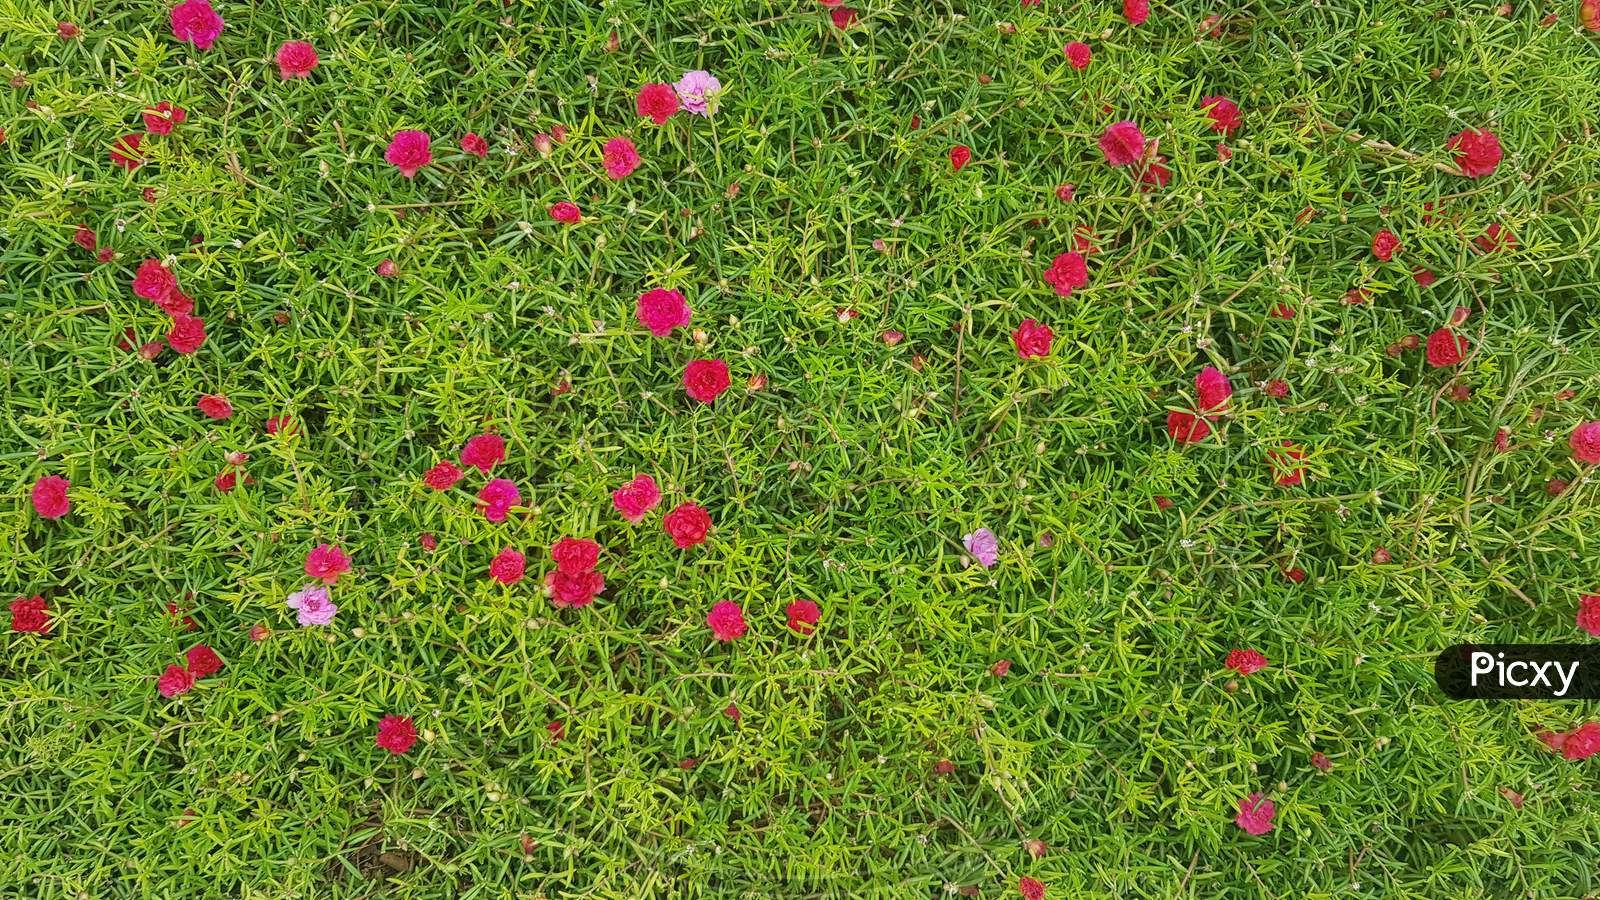 Moss rose is beautiful garden plant